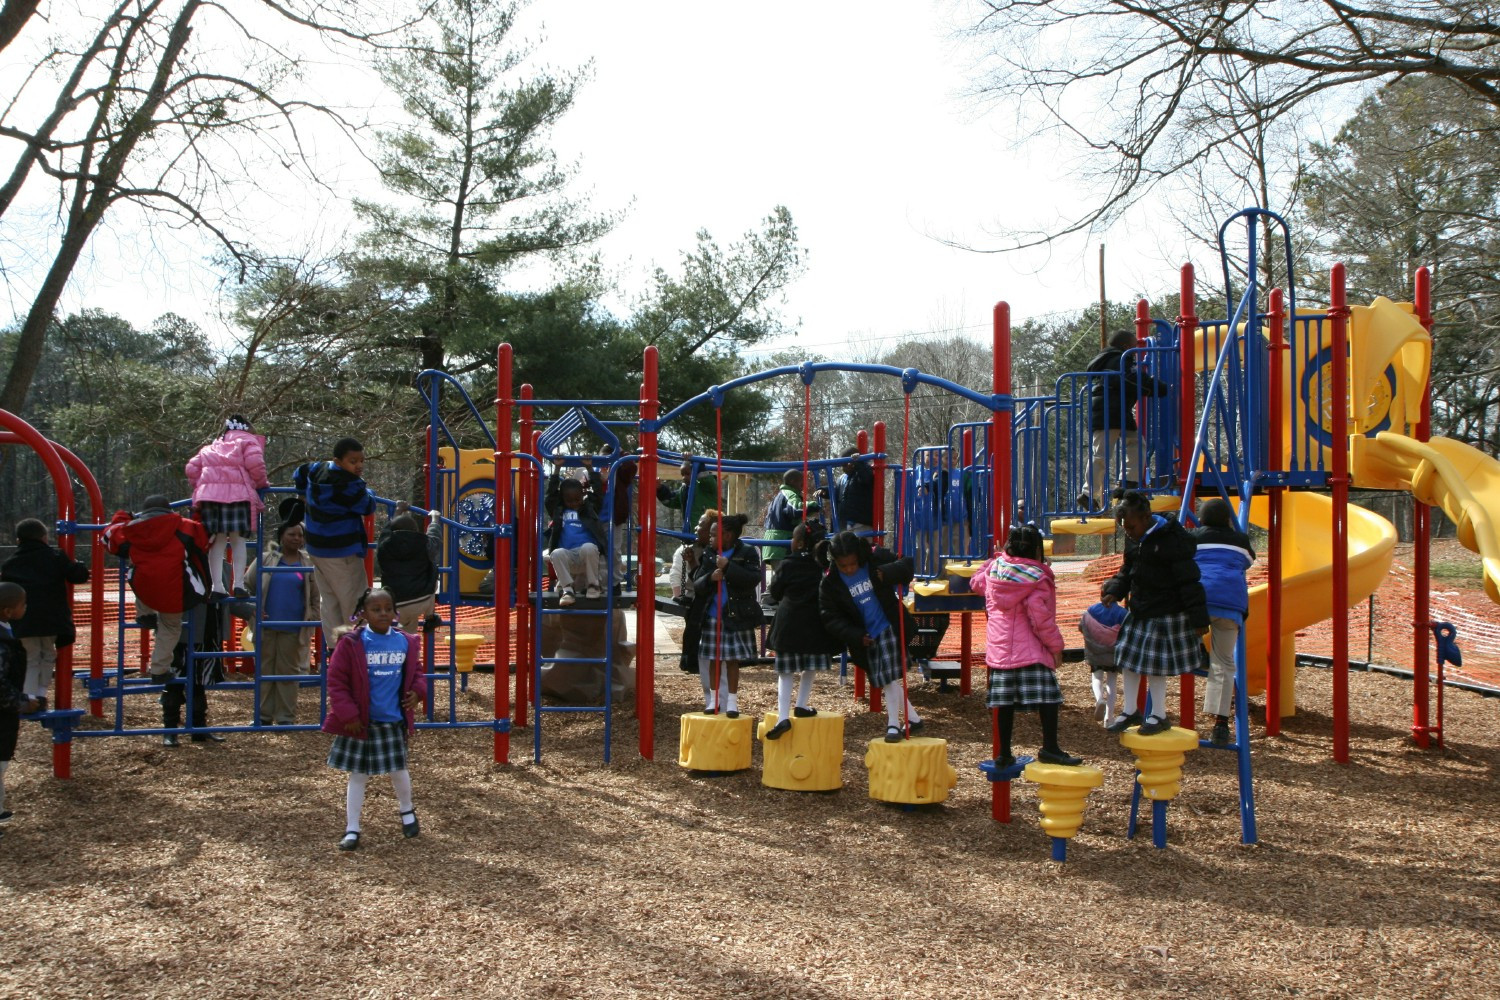 Verinteers partner with charter school to build playground.